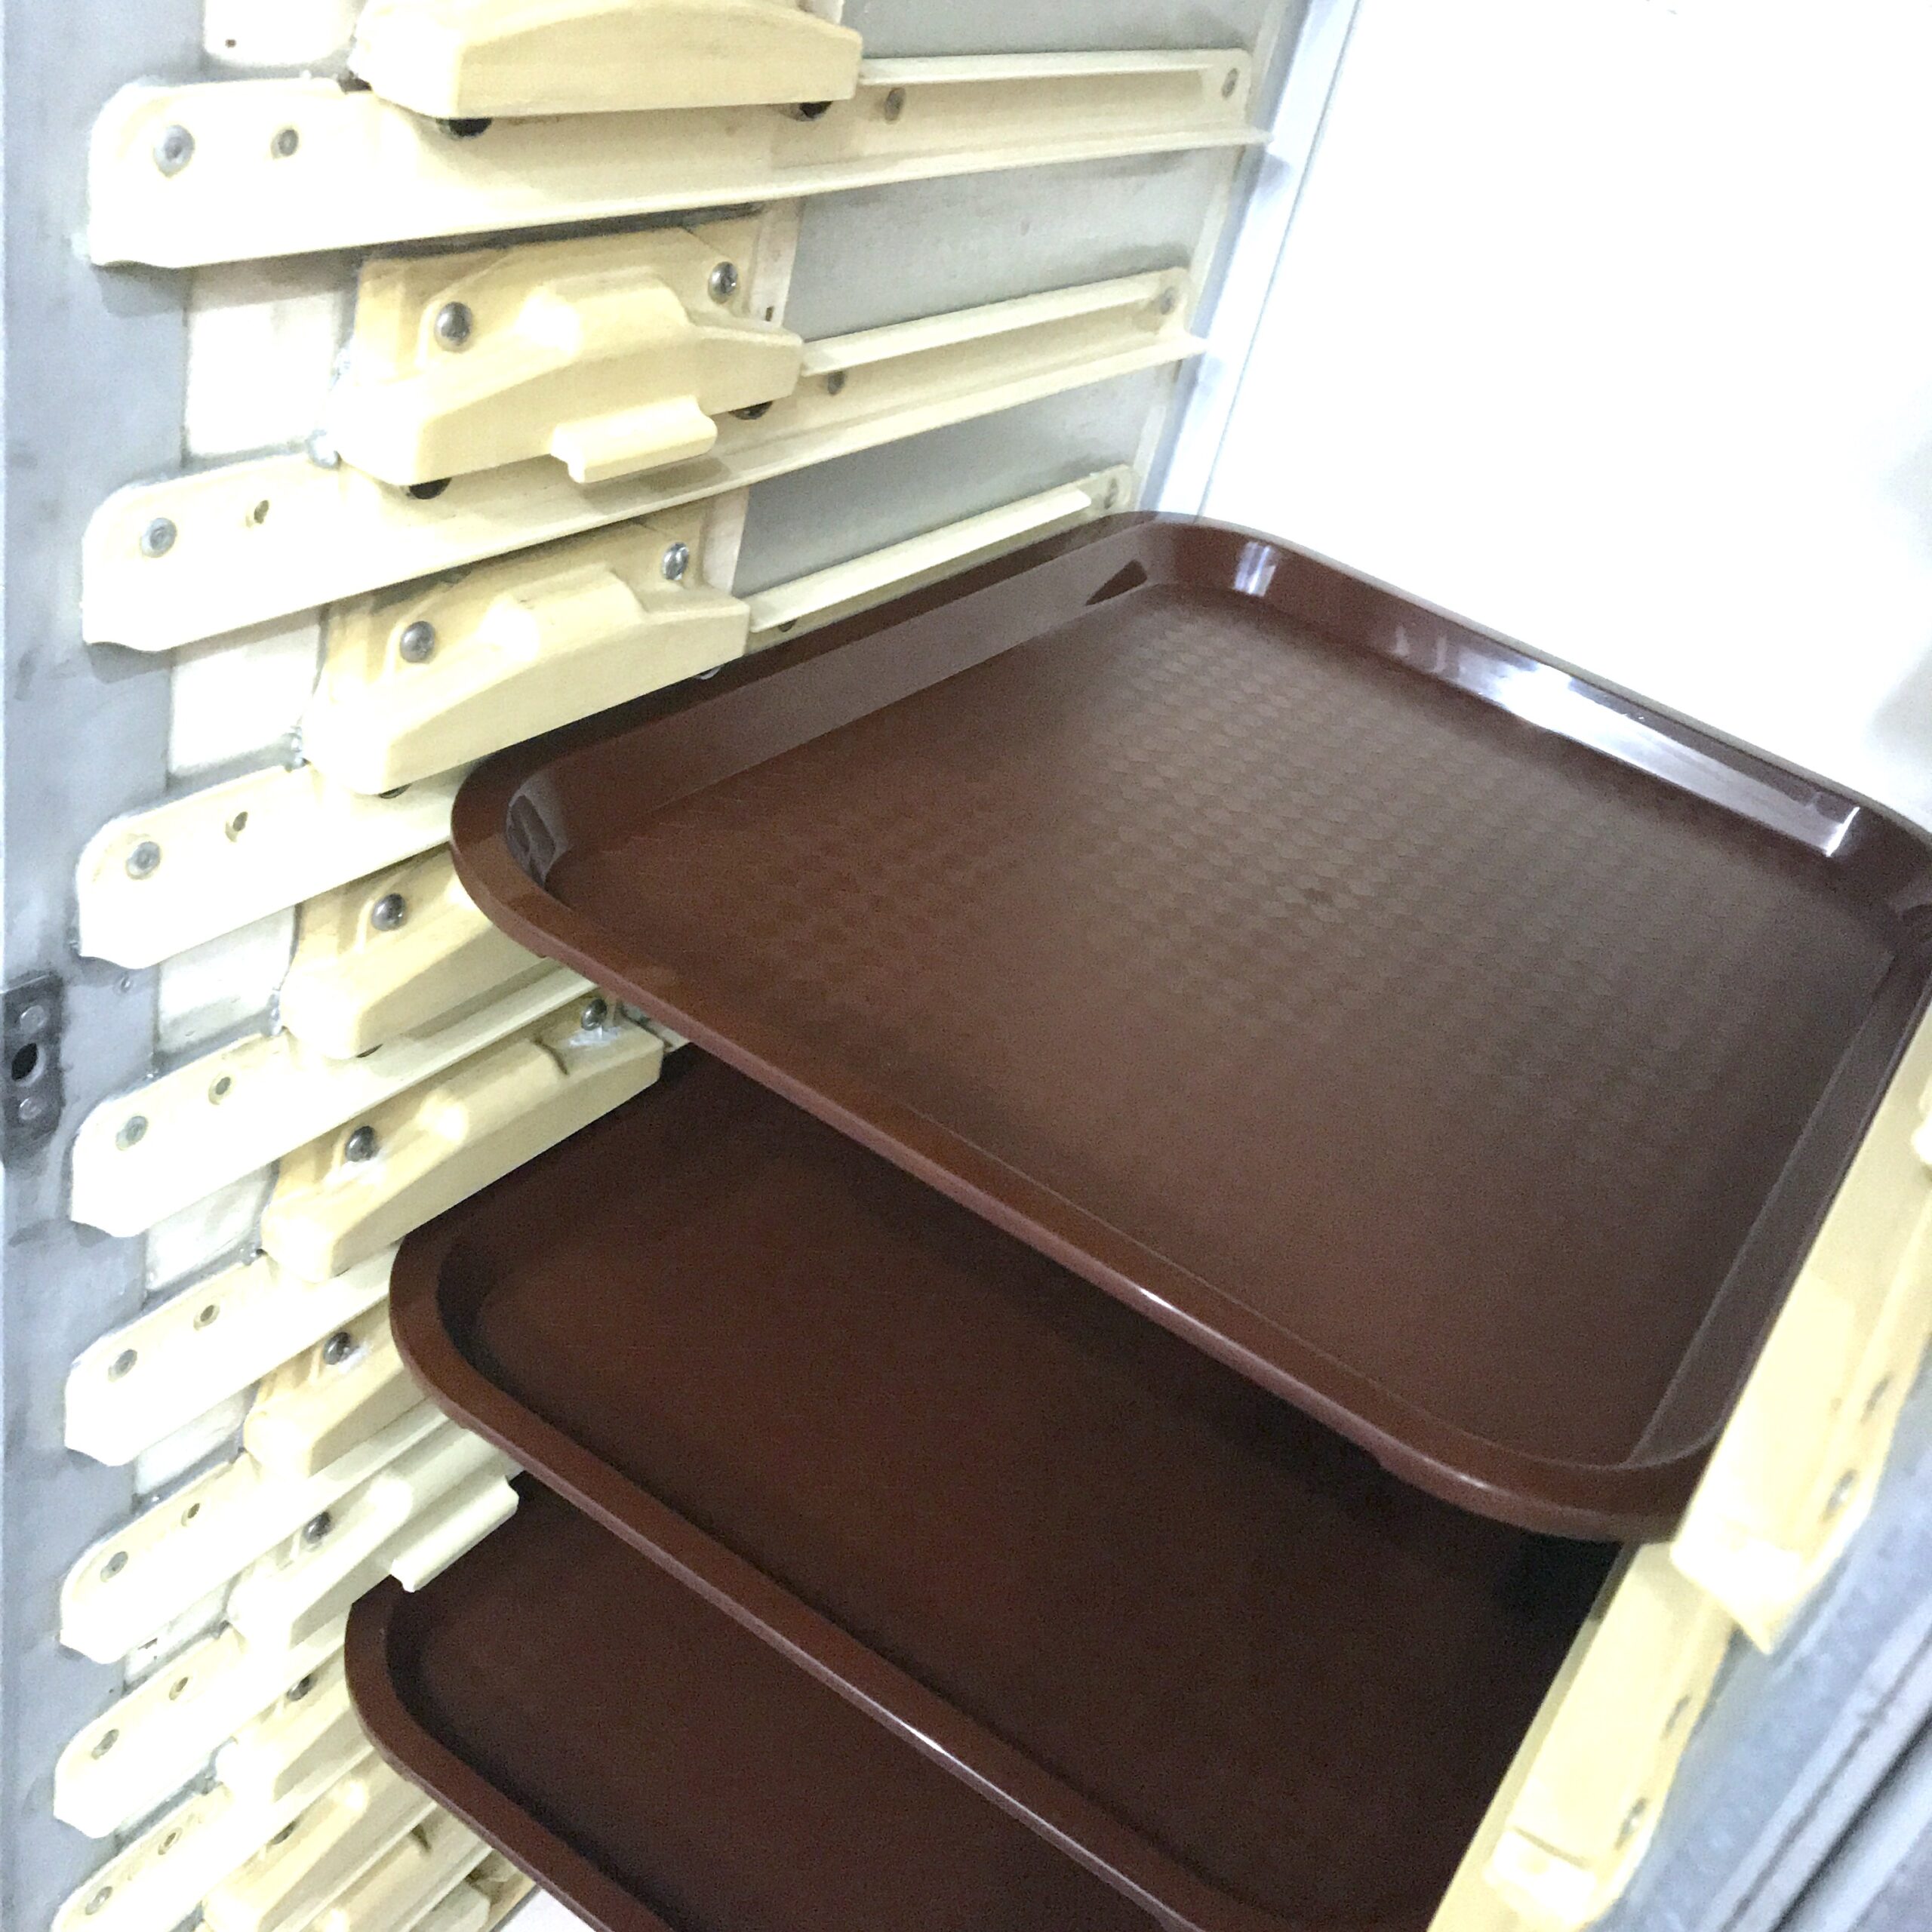 AVIATION Interior Color Tray カラートレー 各種ミールカート対応